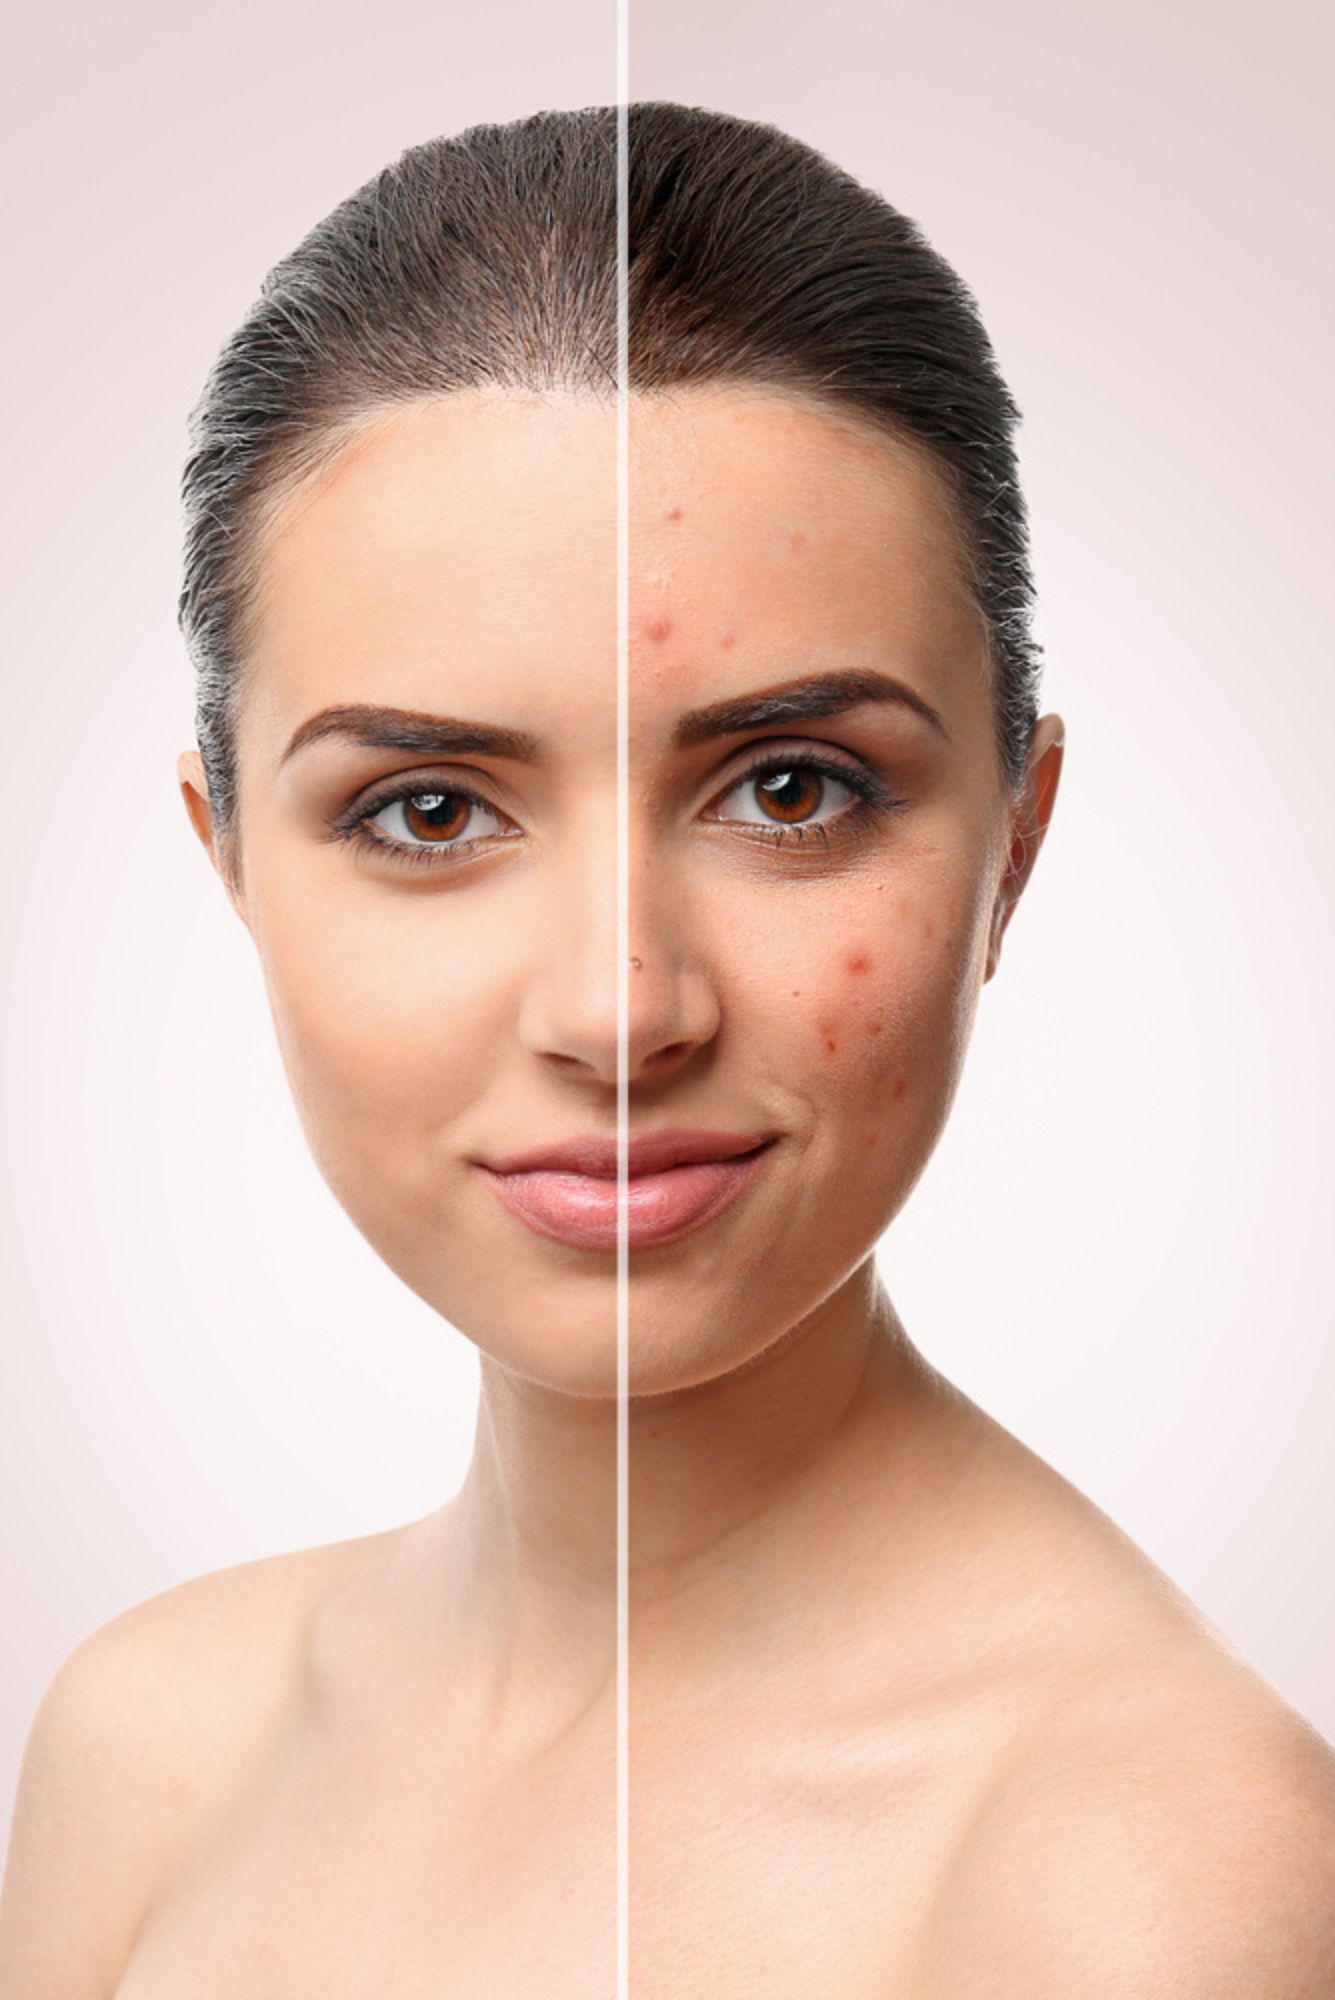 acne face treatment